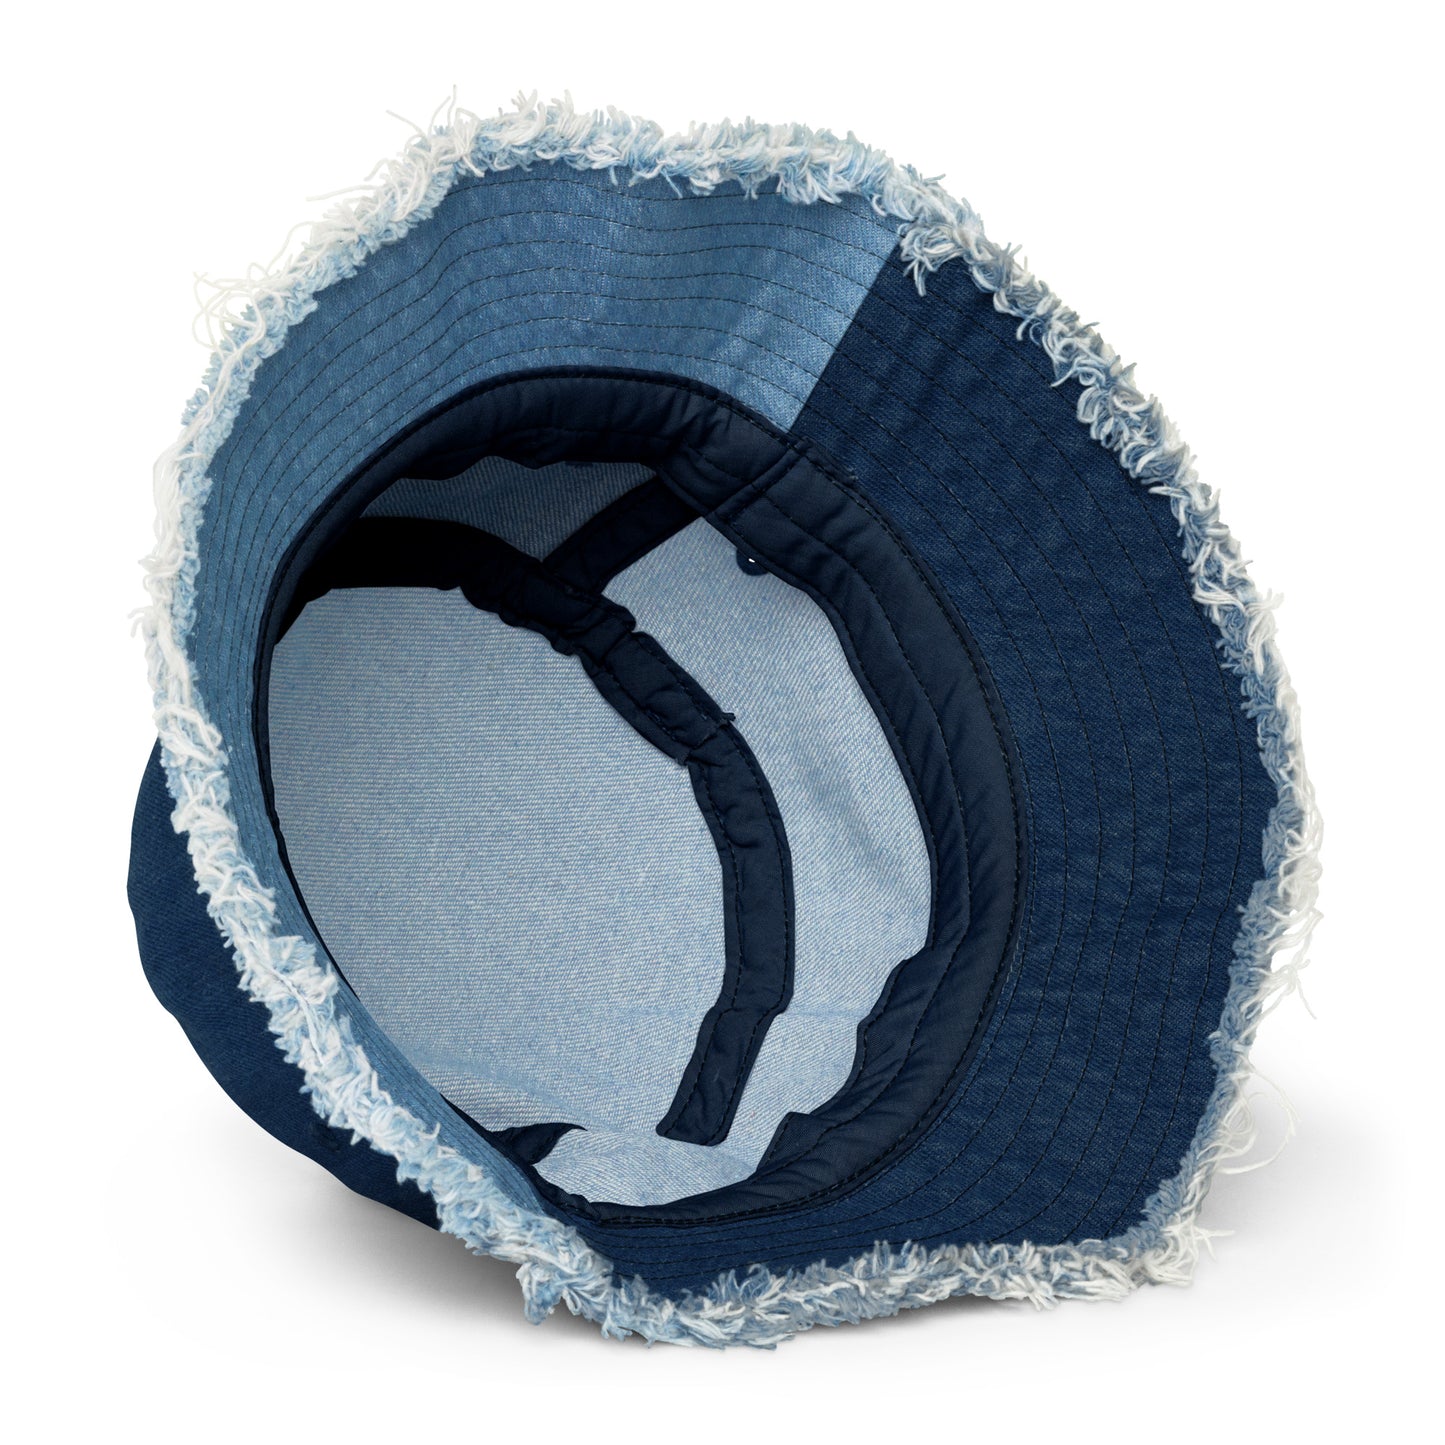 Y006 - Topi ember denim yang rusak (biru/ biru tua)